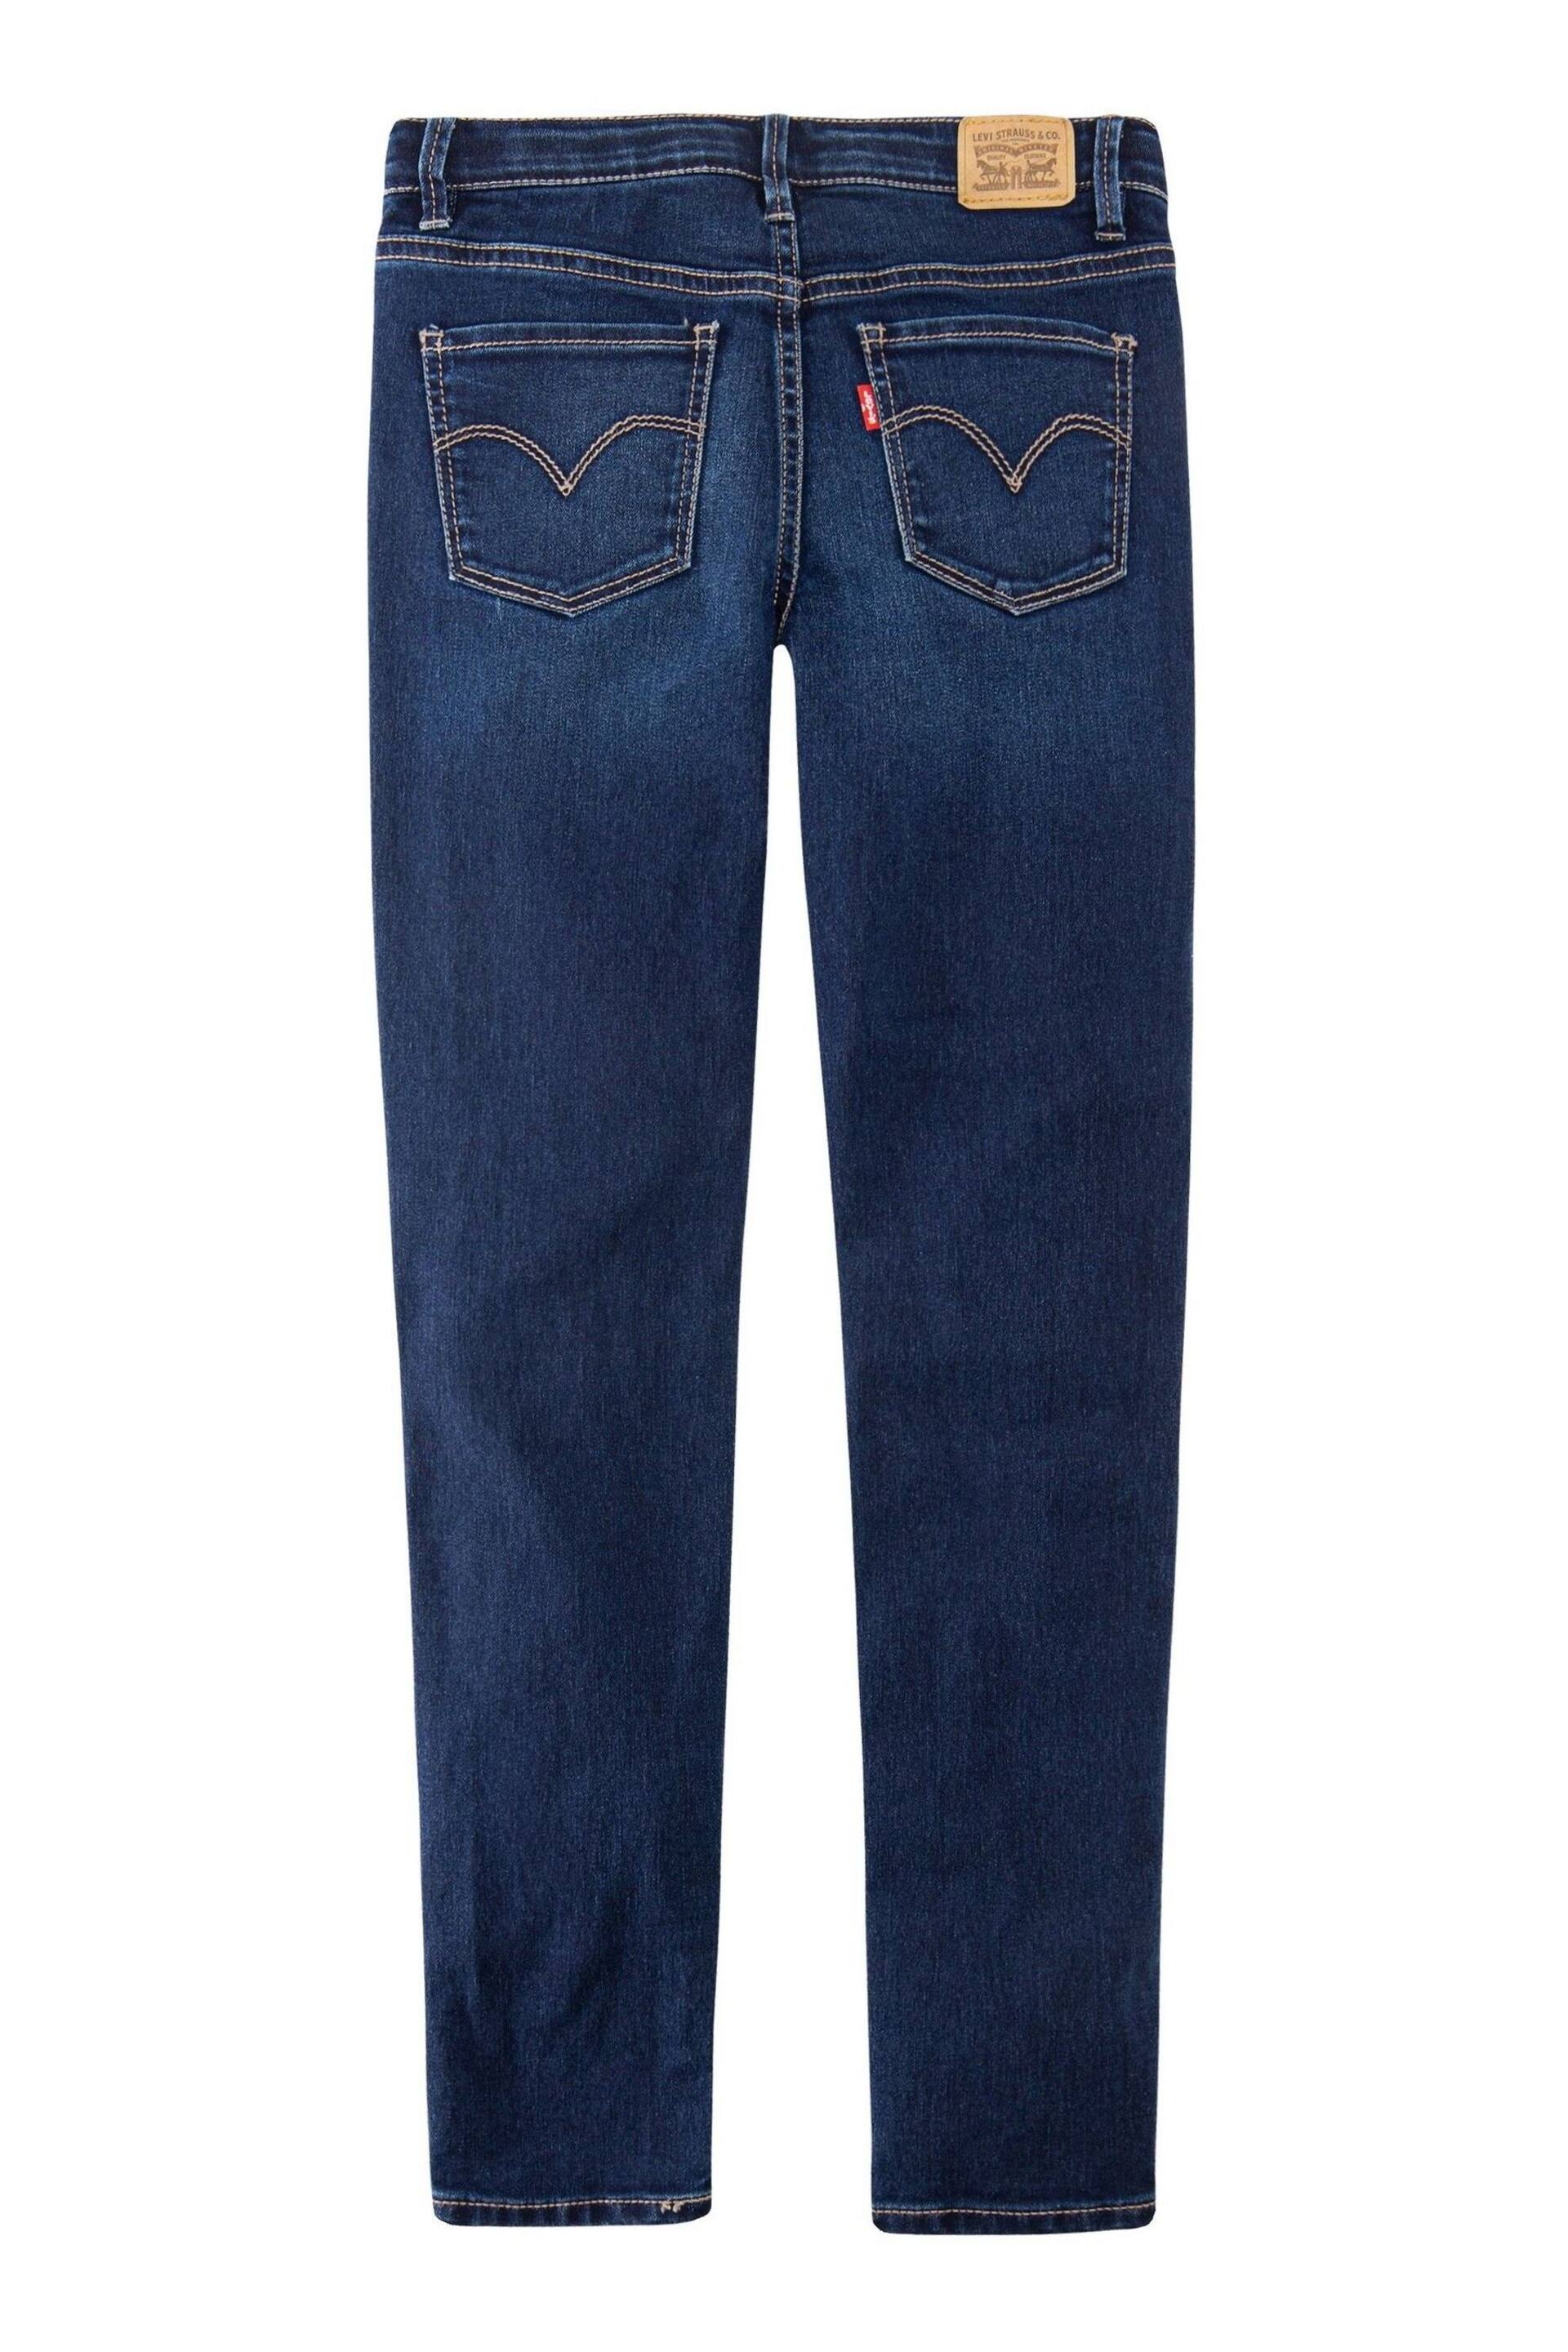 Levi's® Complex 710™ Super Skinny Jeans - Image 6 of 7